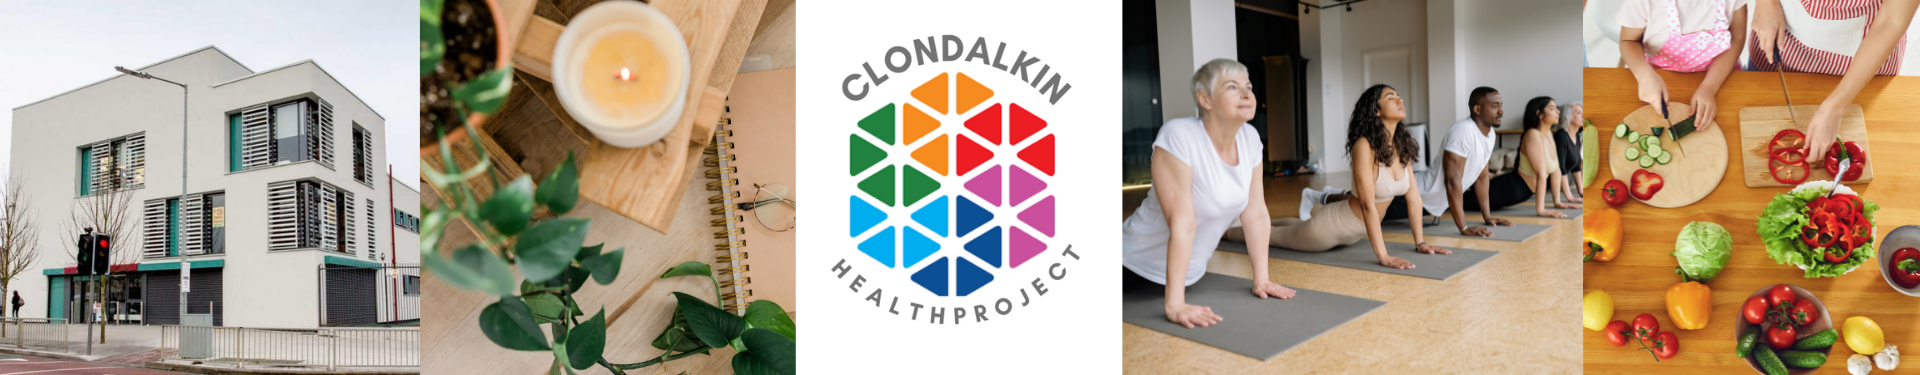 Clondalkin Health Project banner